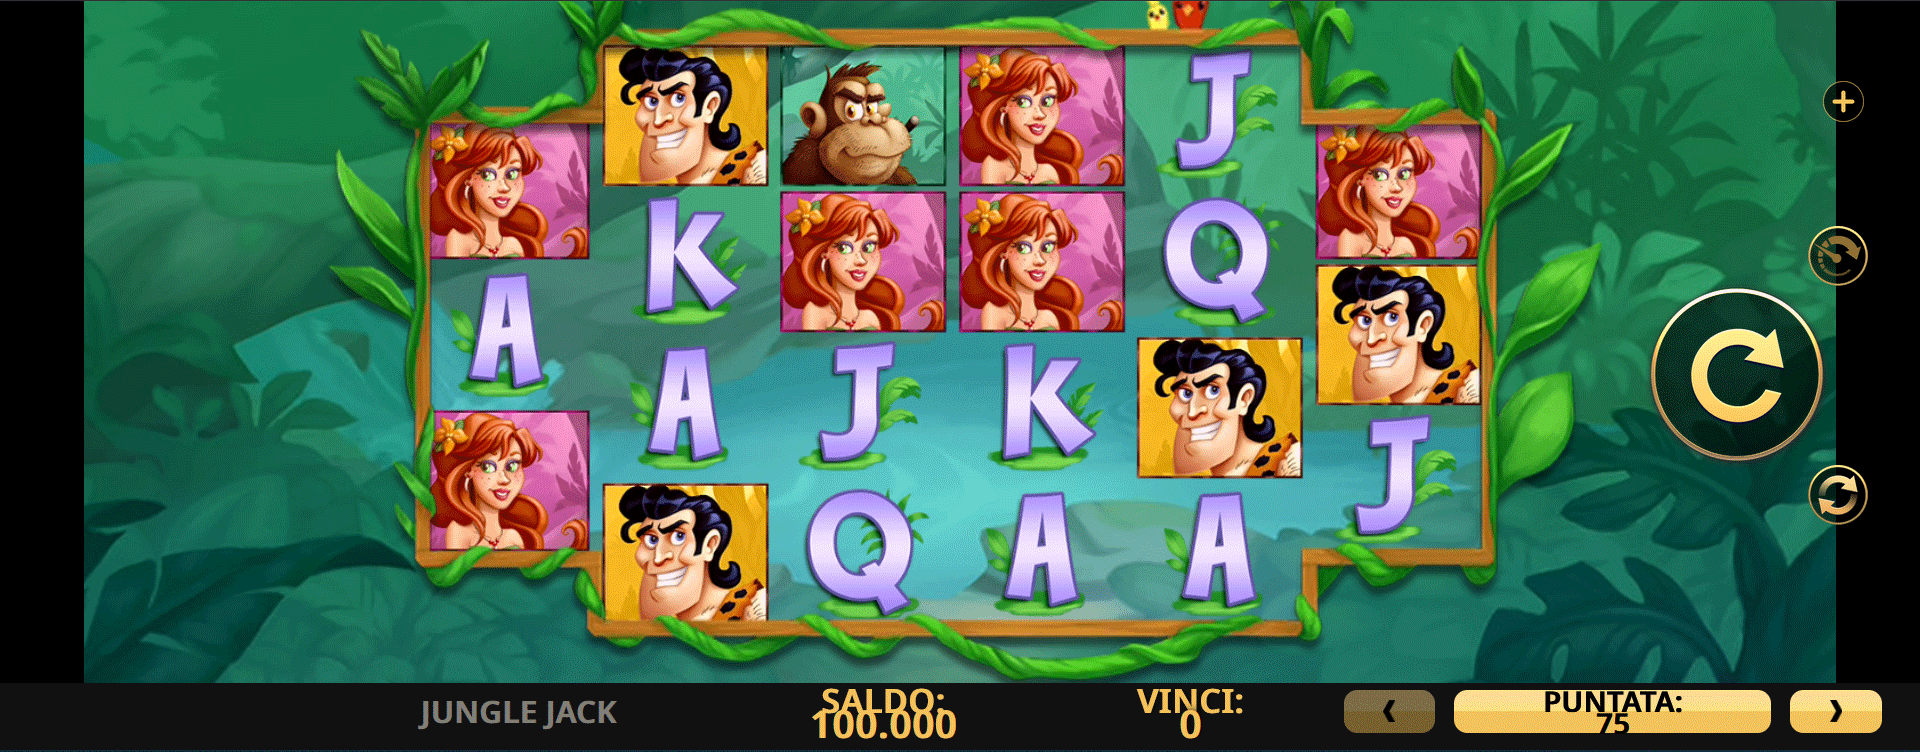 schermata slot machine jungle jack